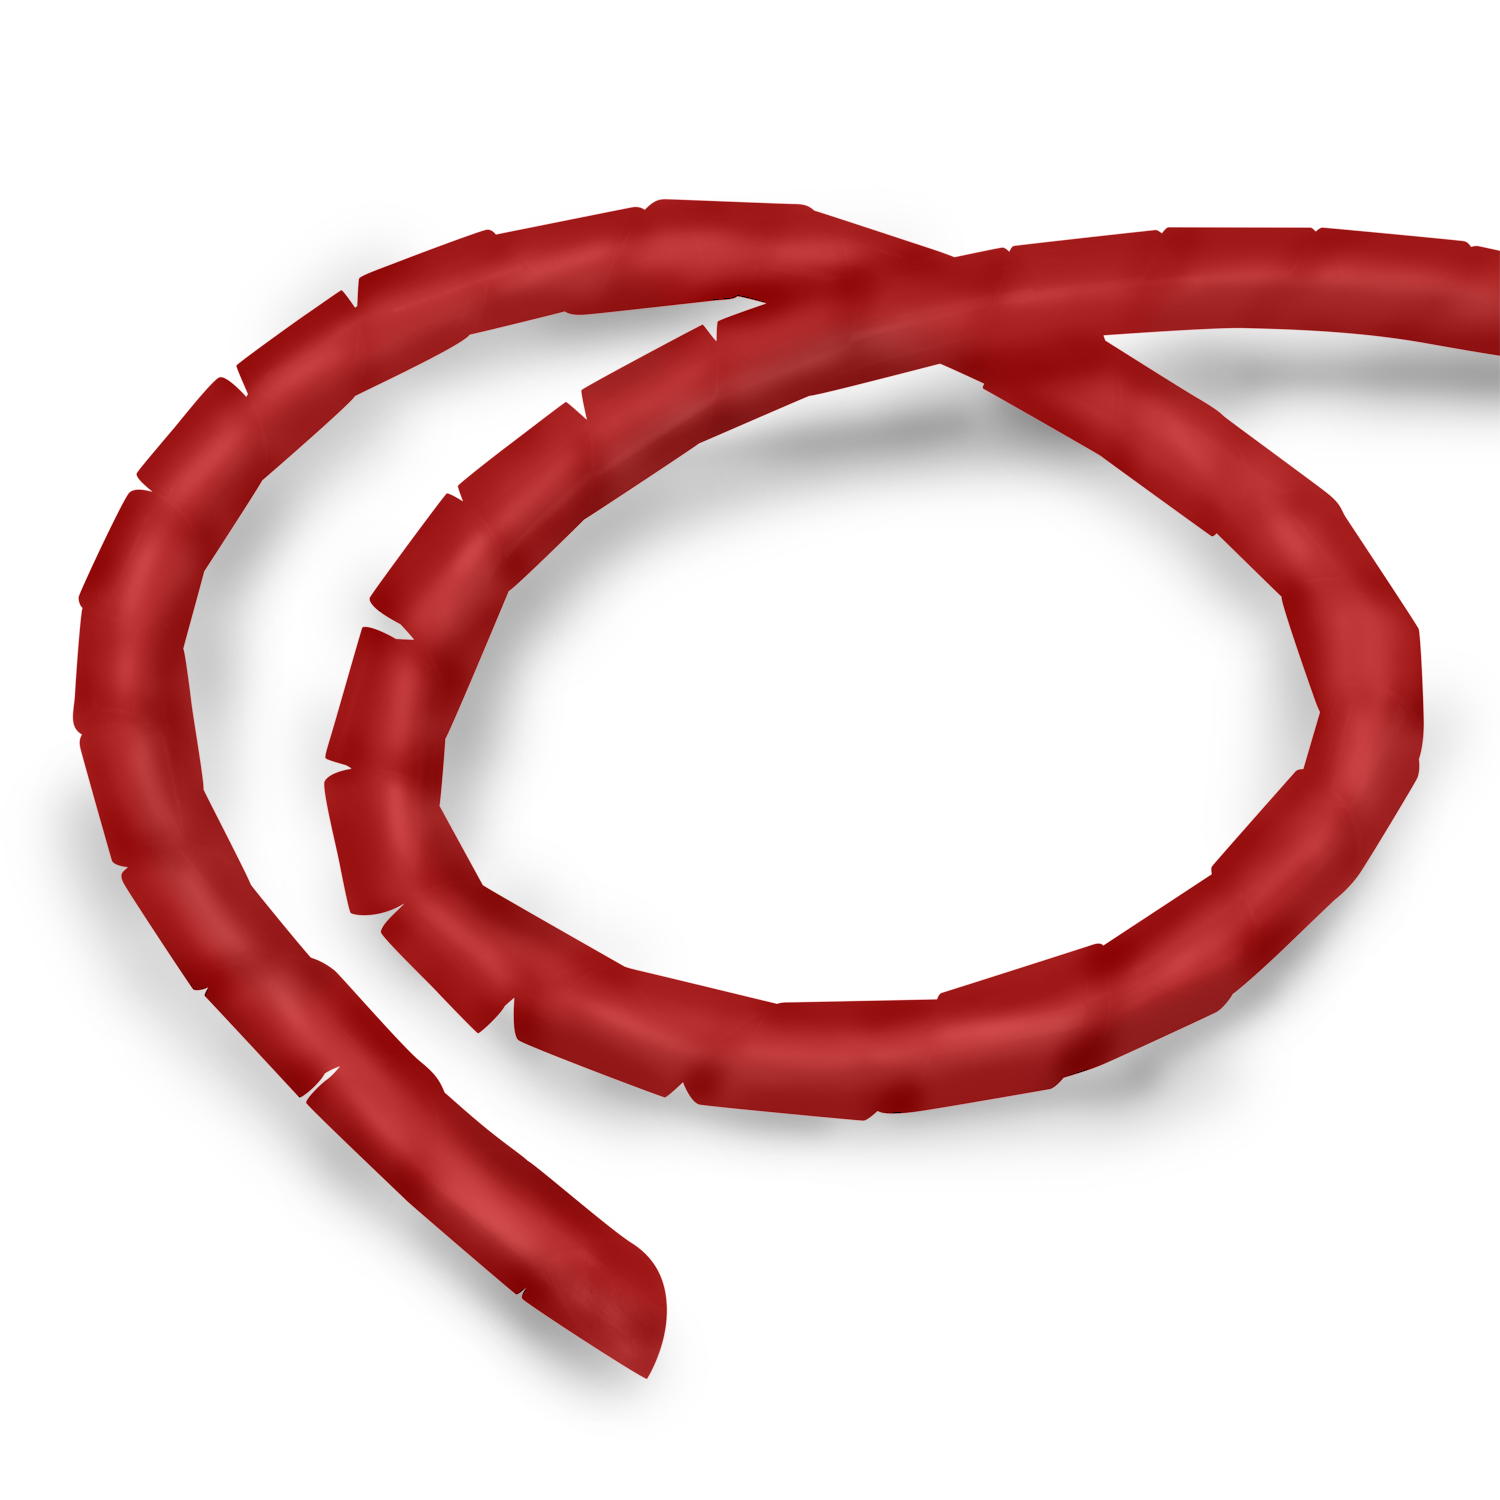 TPFNET 3er Pack Premium Spiral-Kabelschlauch 4-50mm, Rot Rot, Kabelschlauch, 10m